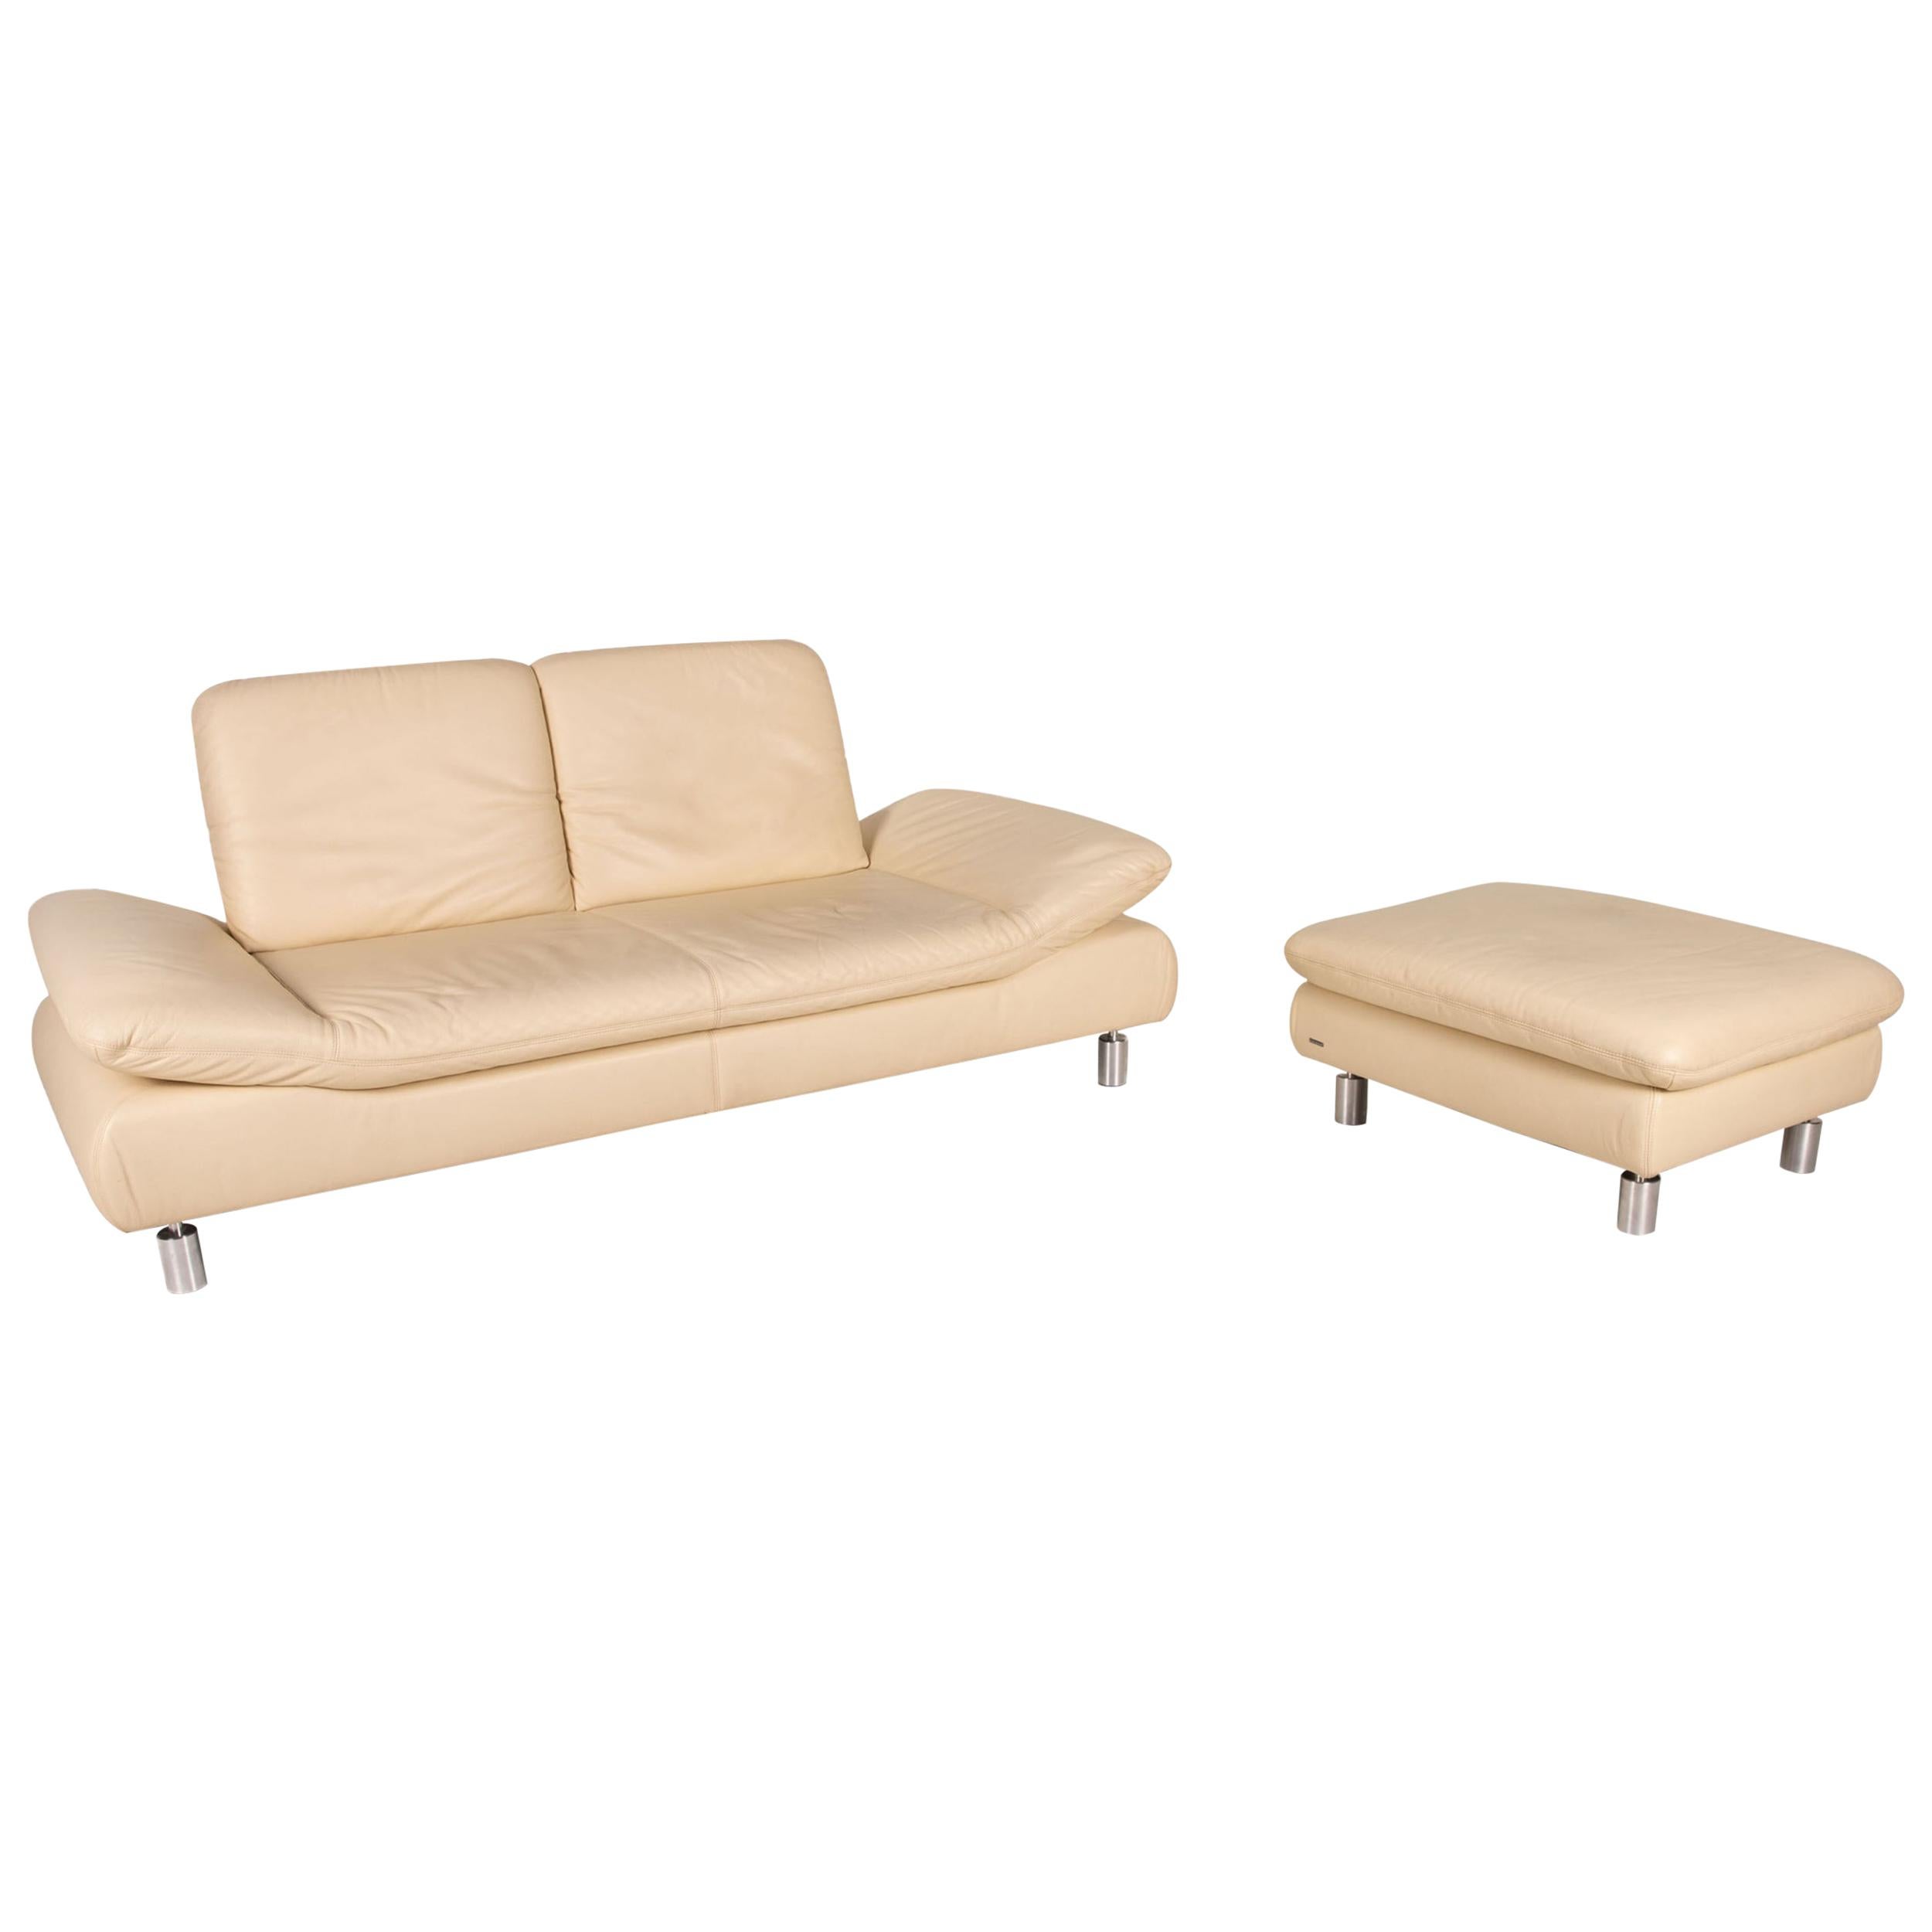 Koinor Rivoli leather sofa set cream 1x two-seater 1x stool function For Sale